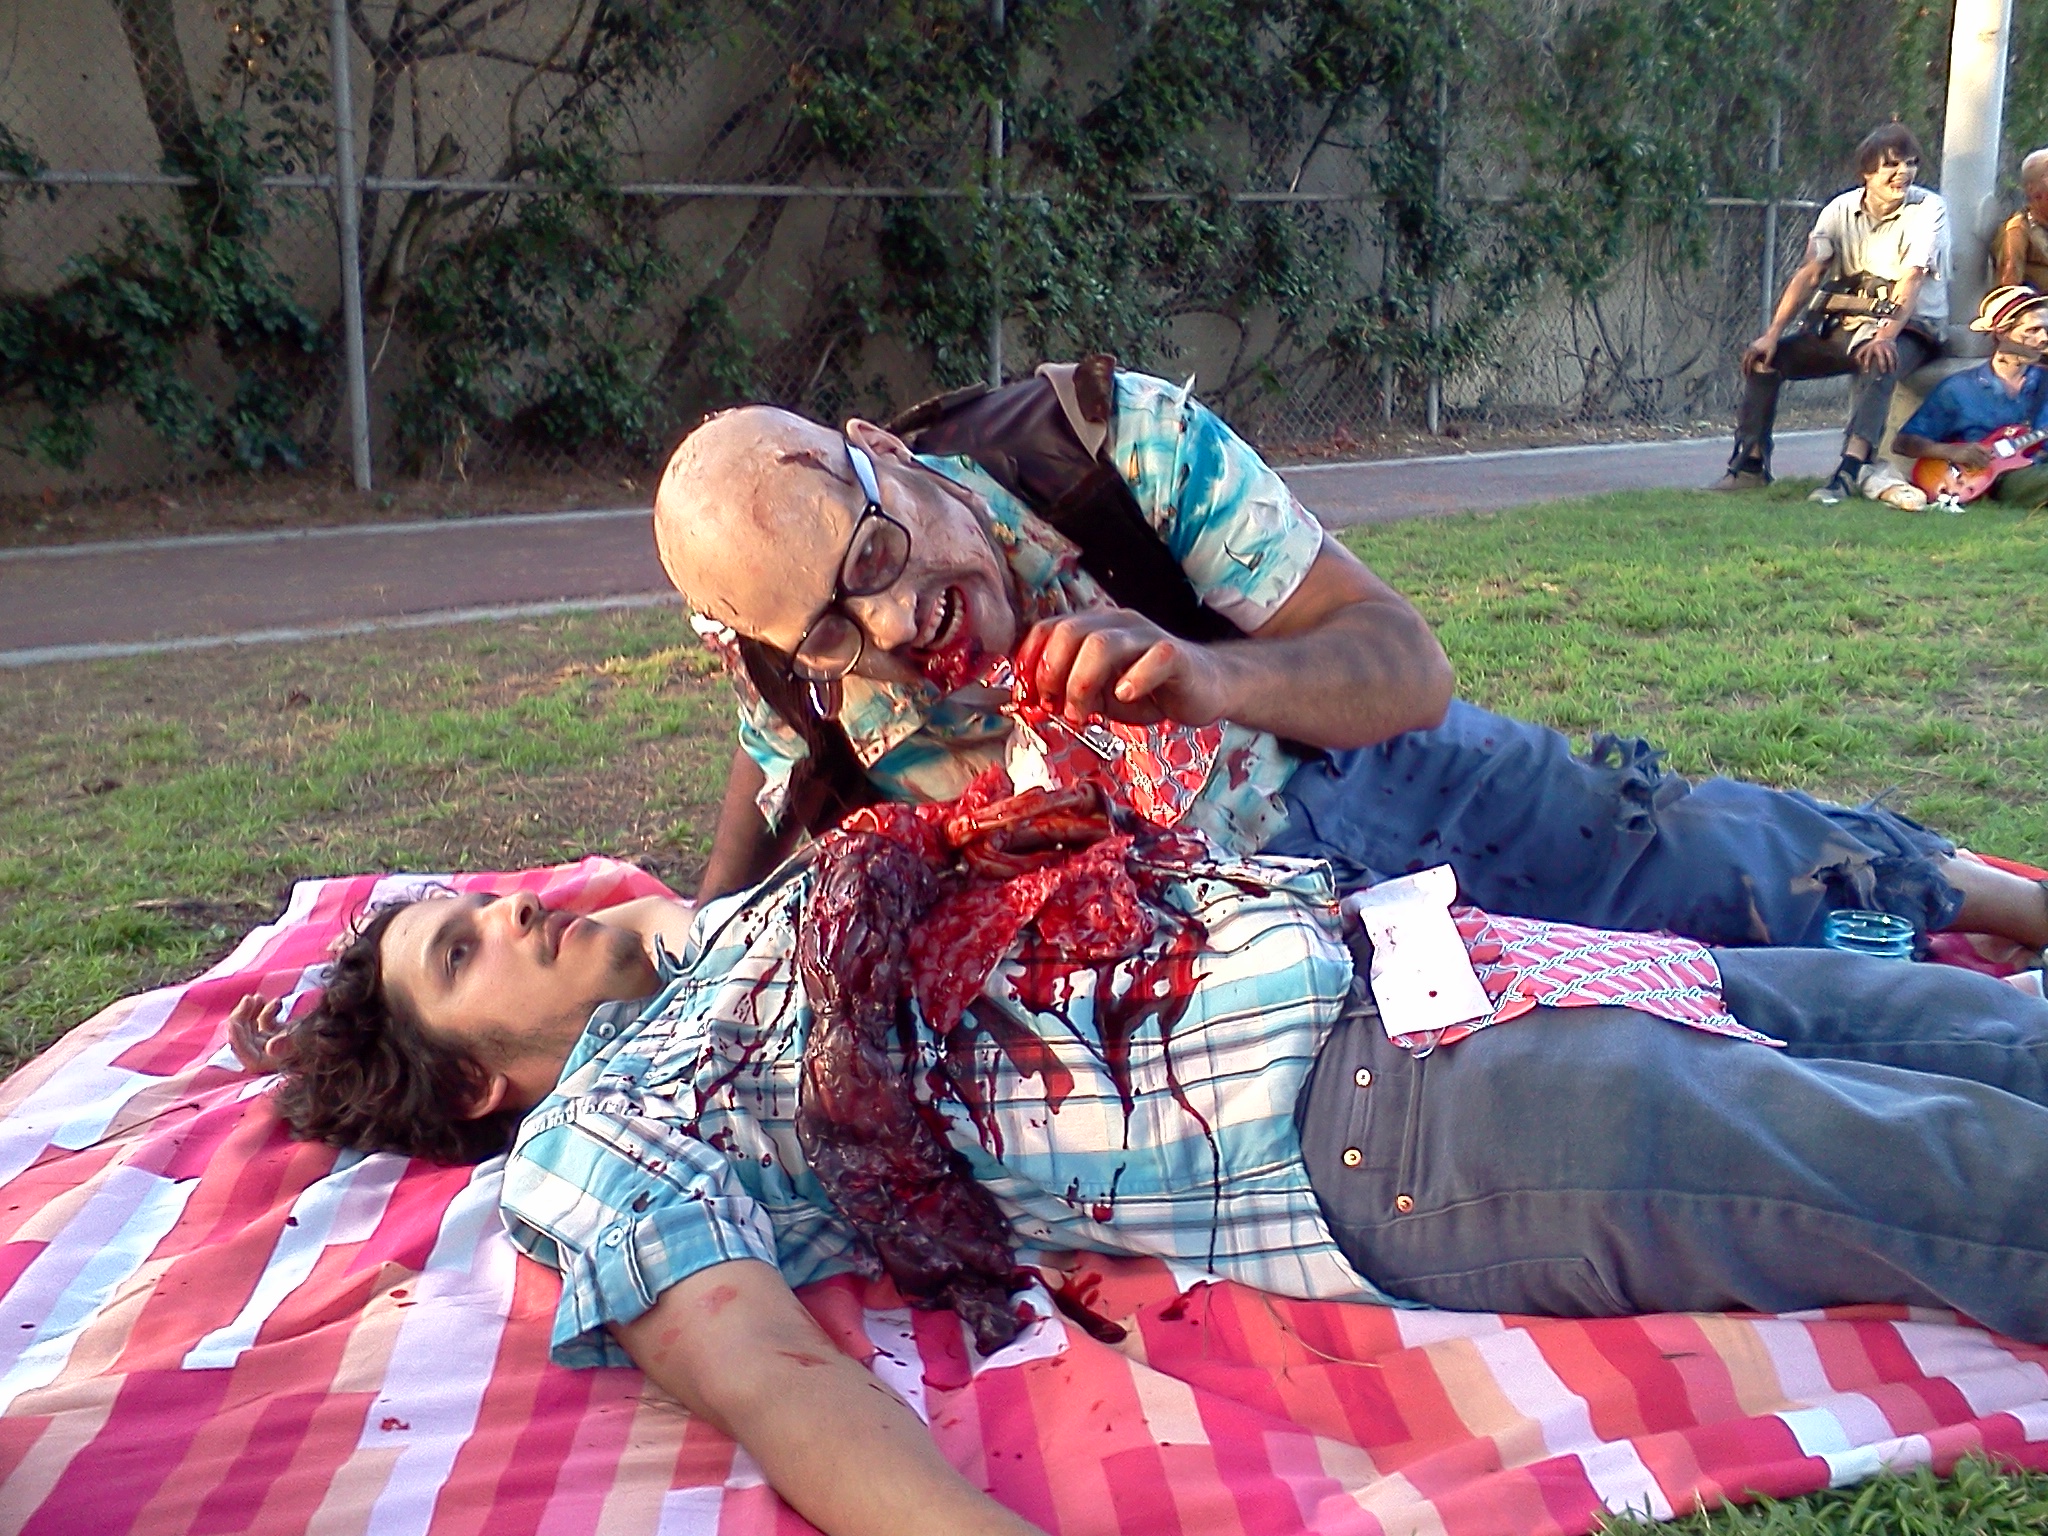 Zombie on George Watsky (http://www.youtube.com/user/gwatsky/videos) music video 